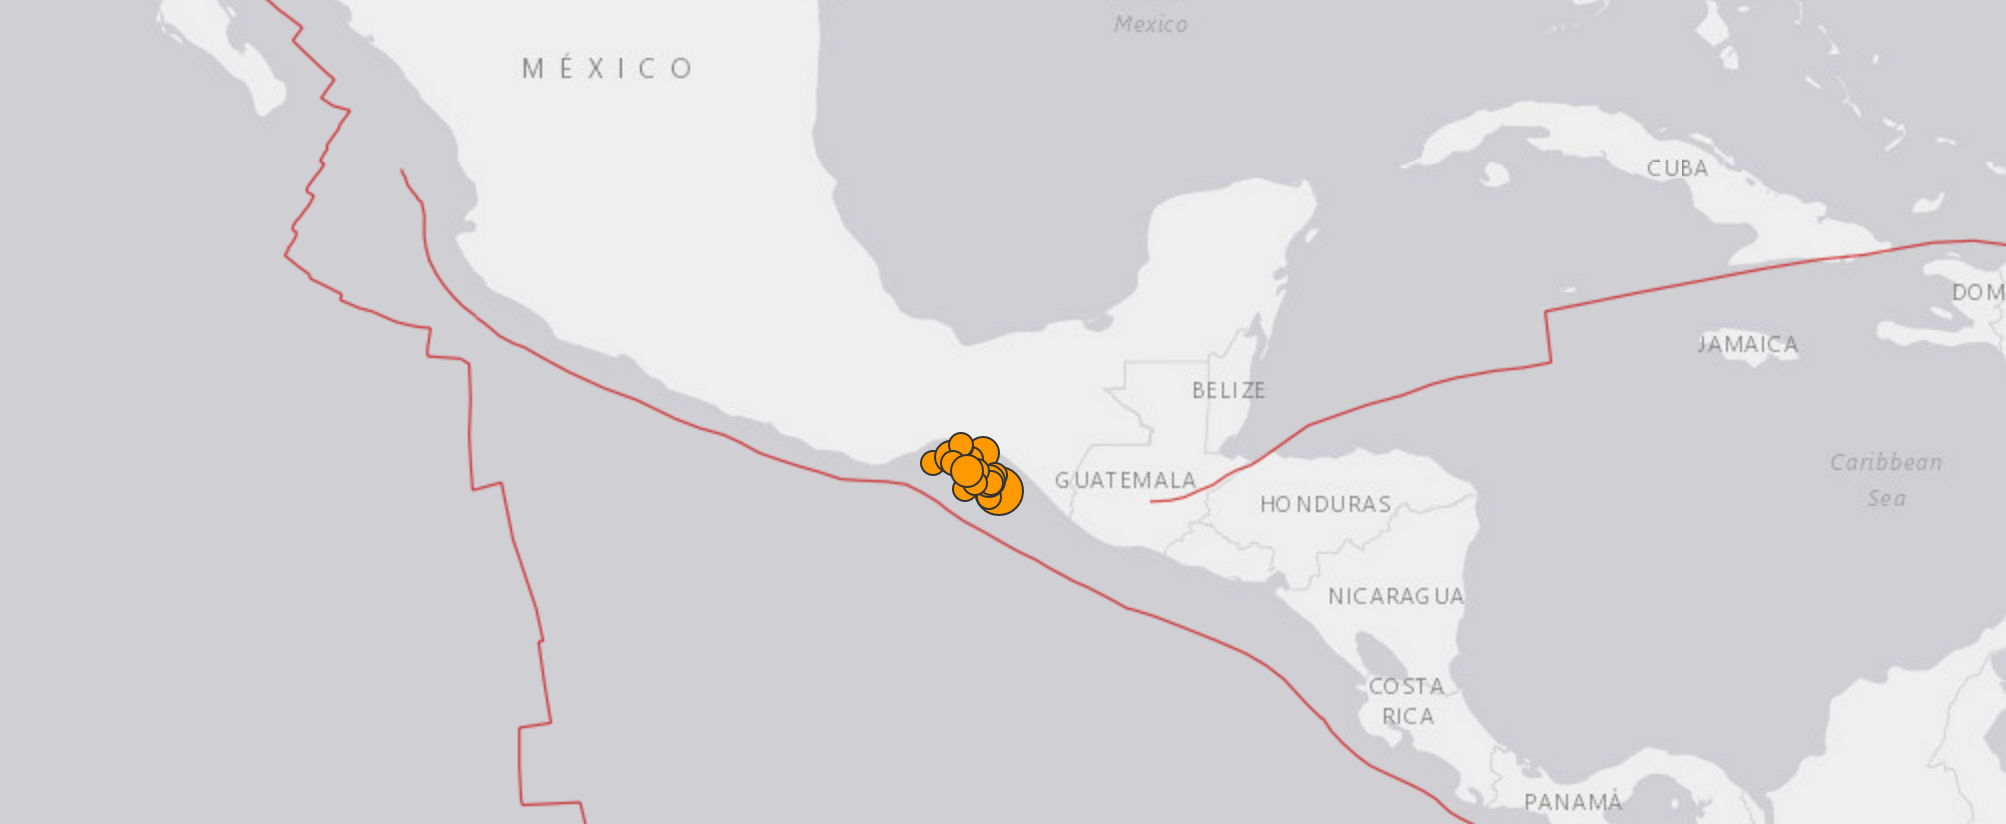 Mexico Rocked By Massive 8.1-Magnitude Earthquake